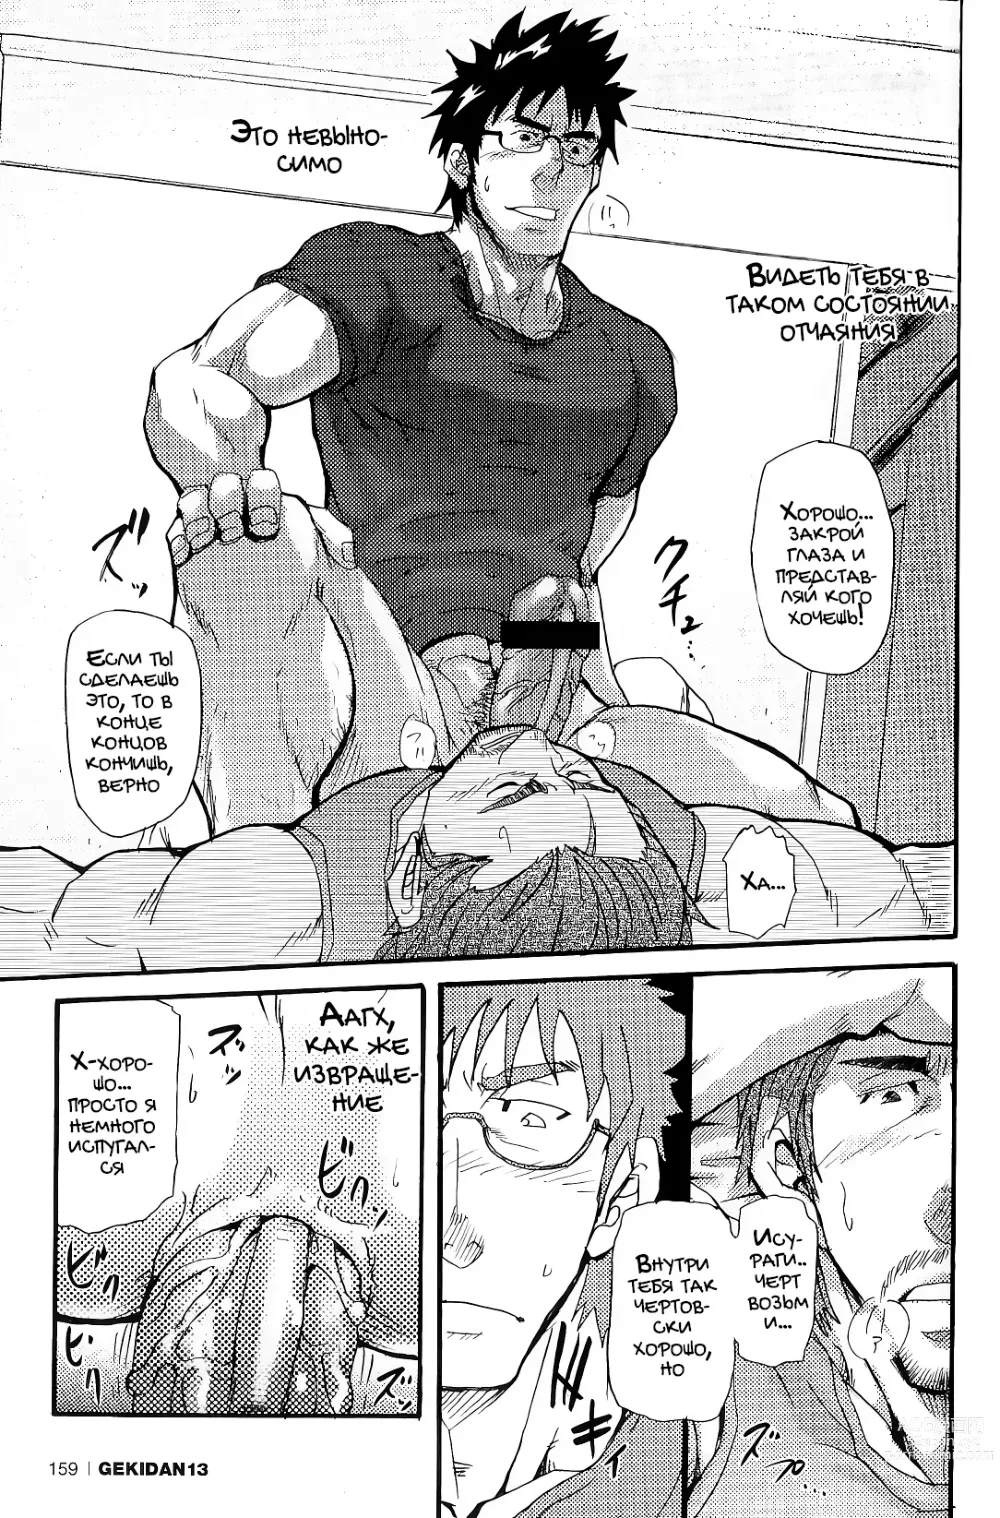 Page 23 of manga 10 дней жизни в одном хаори!!